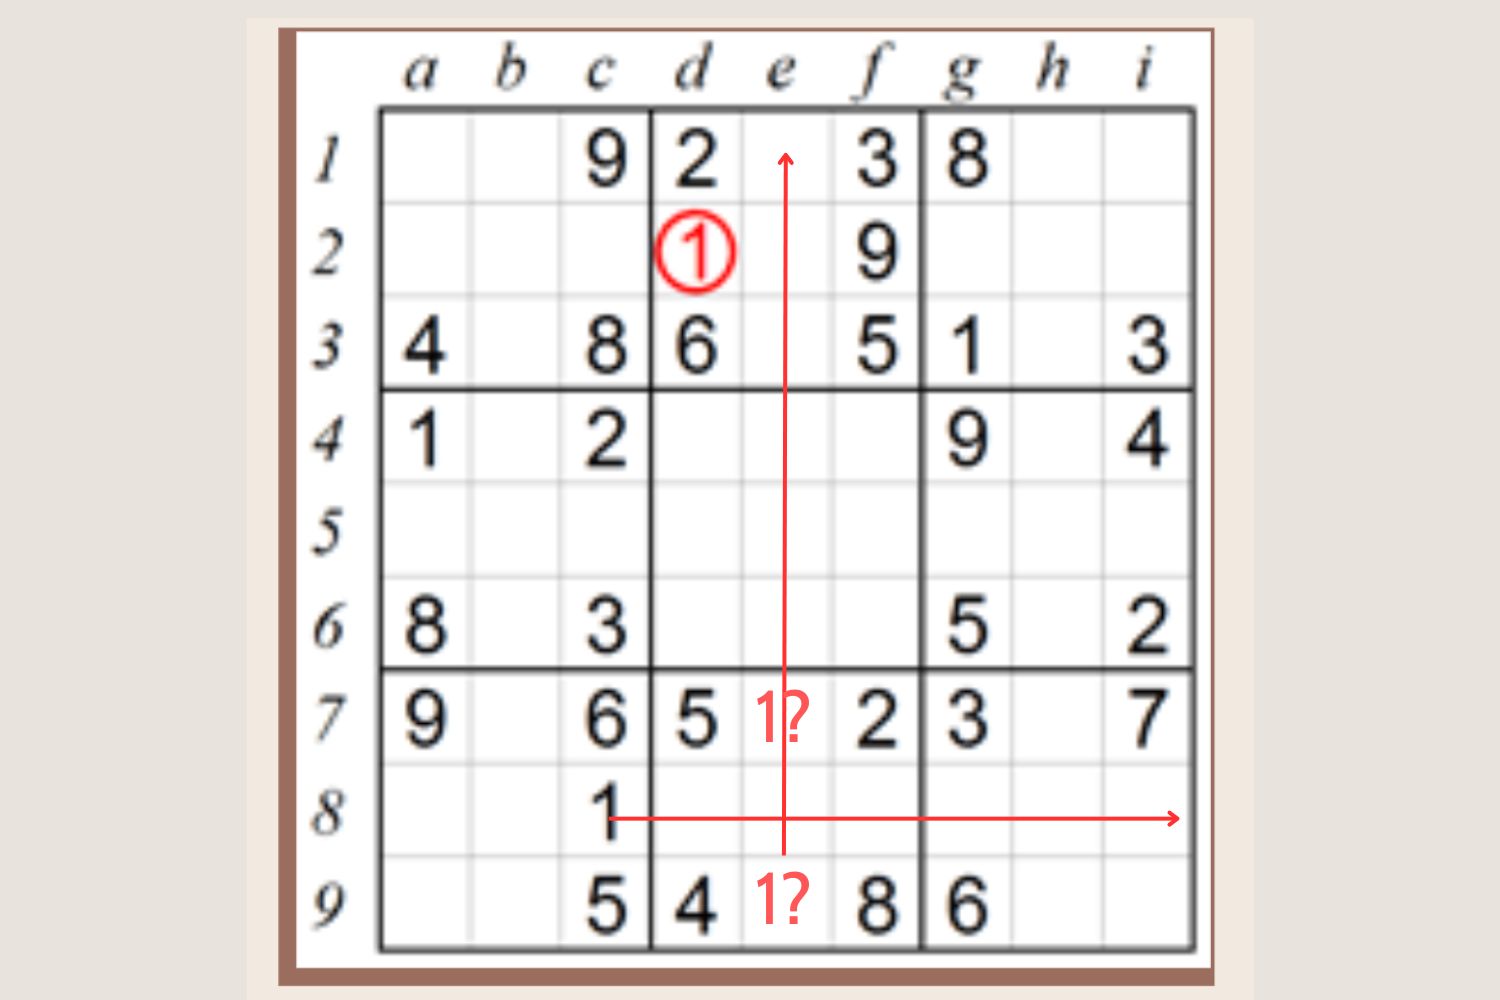 2) Efficient Scanning Techniques to Solve Sudoku Puzzles 